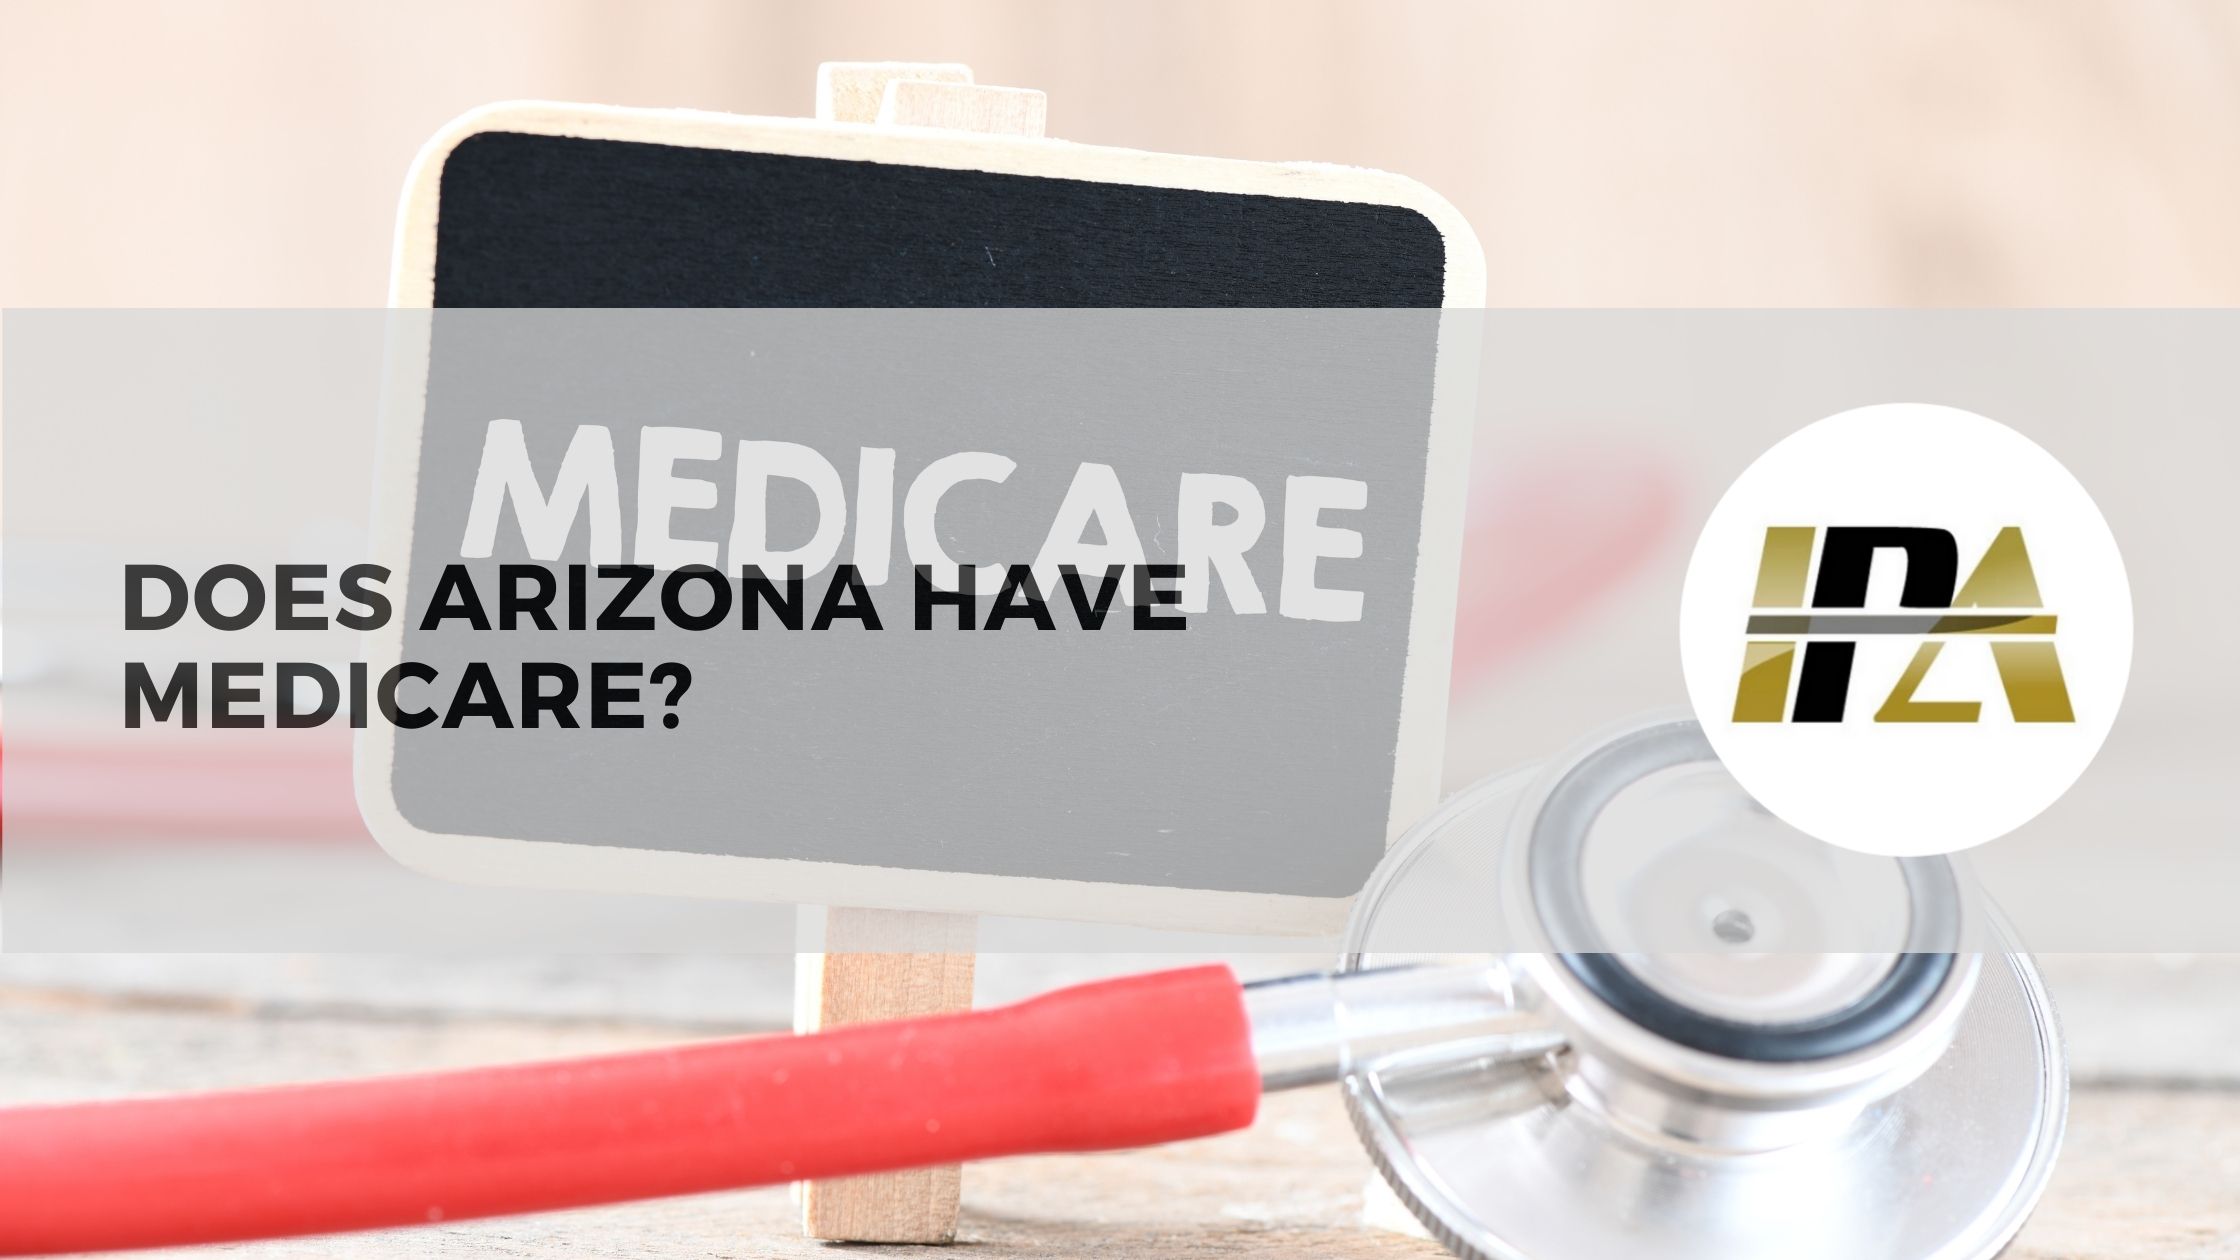 Does Arizona have Medicare